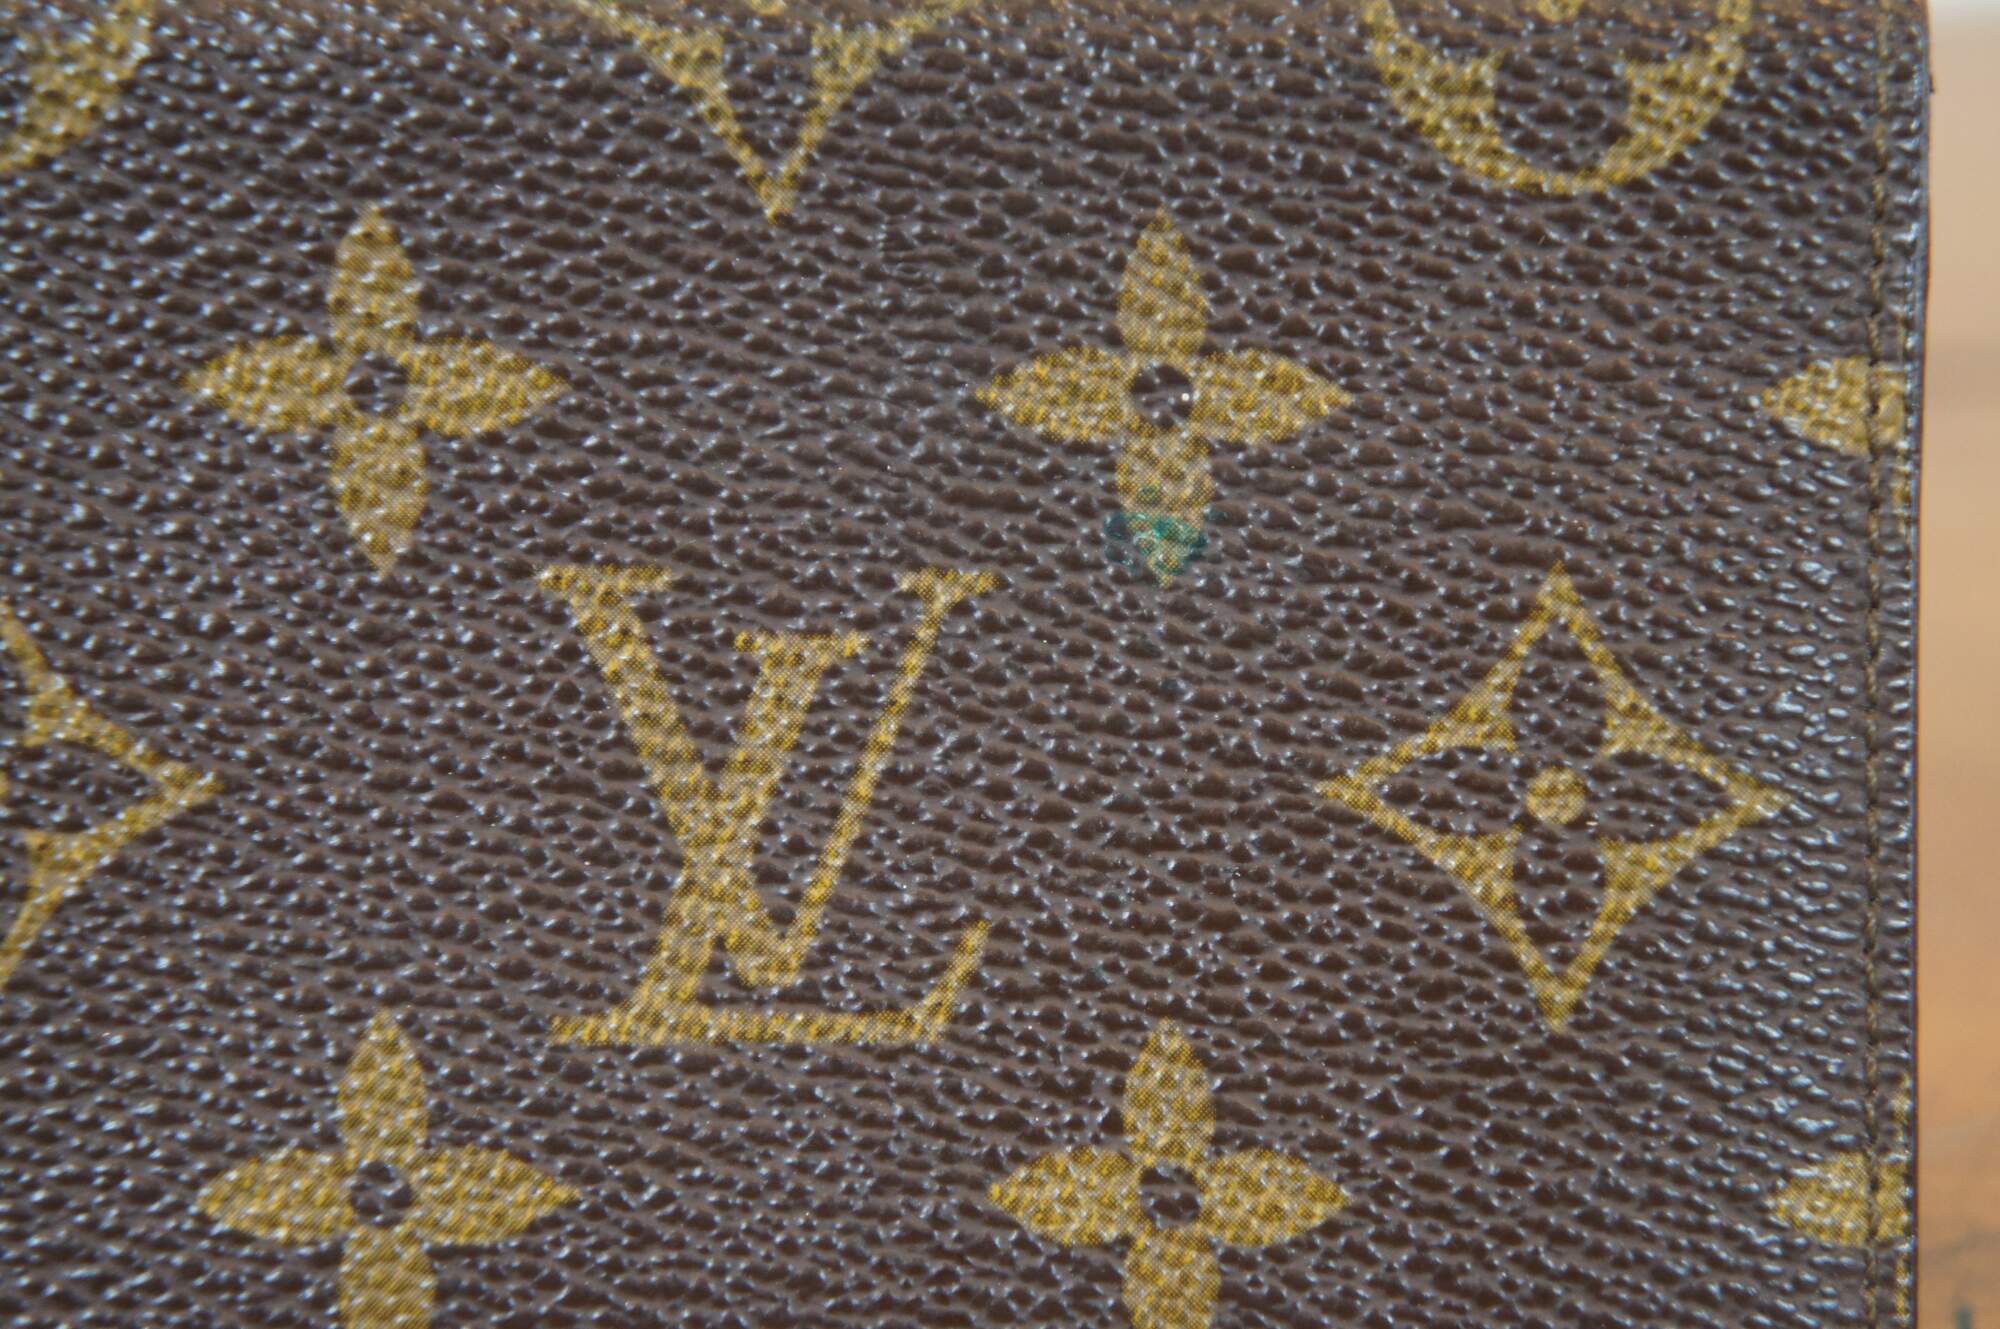 Louis Vuitton Monogram Tapestry Multiple Bi-Fold Wallet